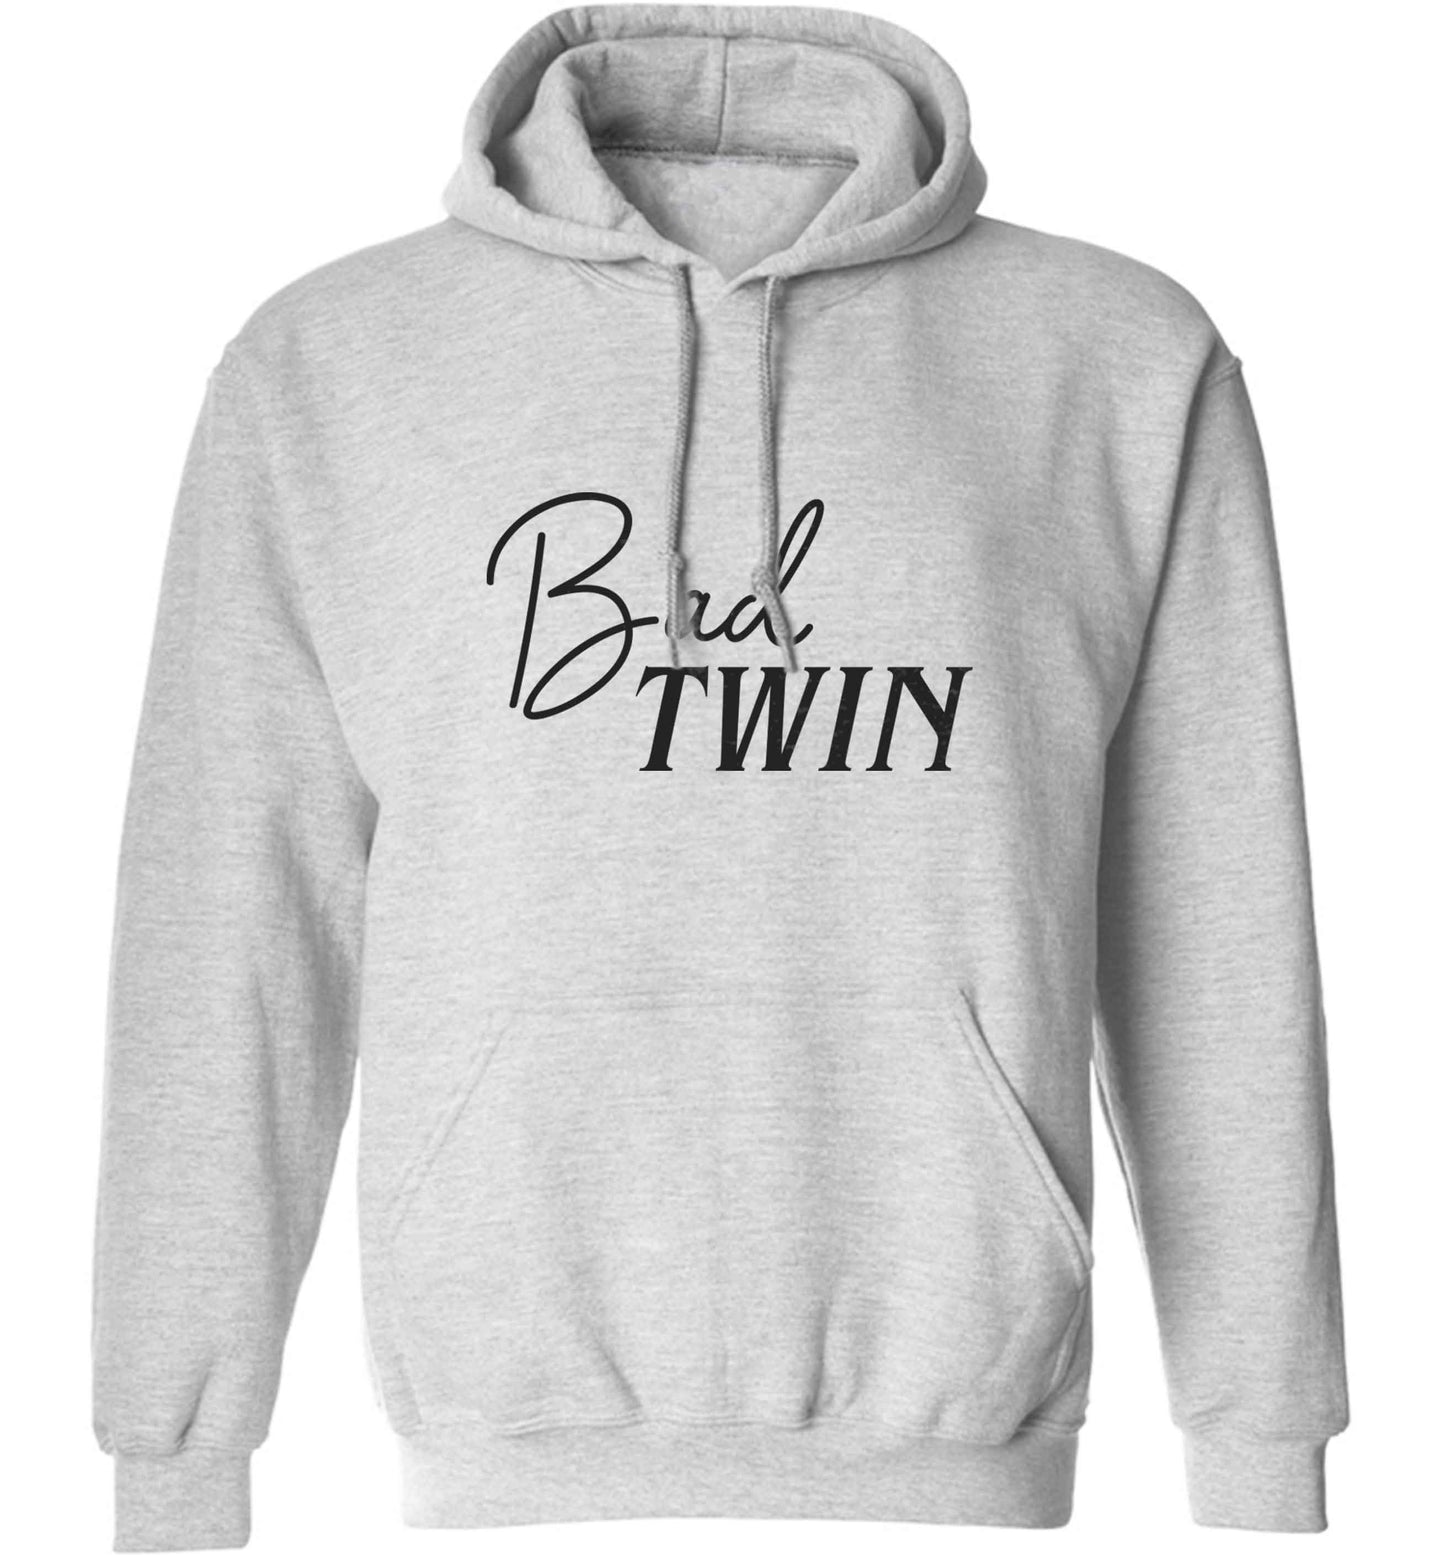 Bad twin adults unisex grey hoodie 2XL